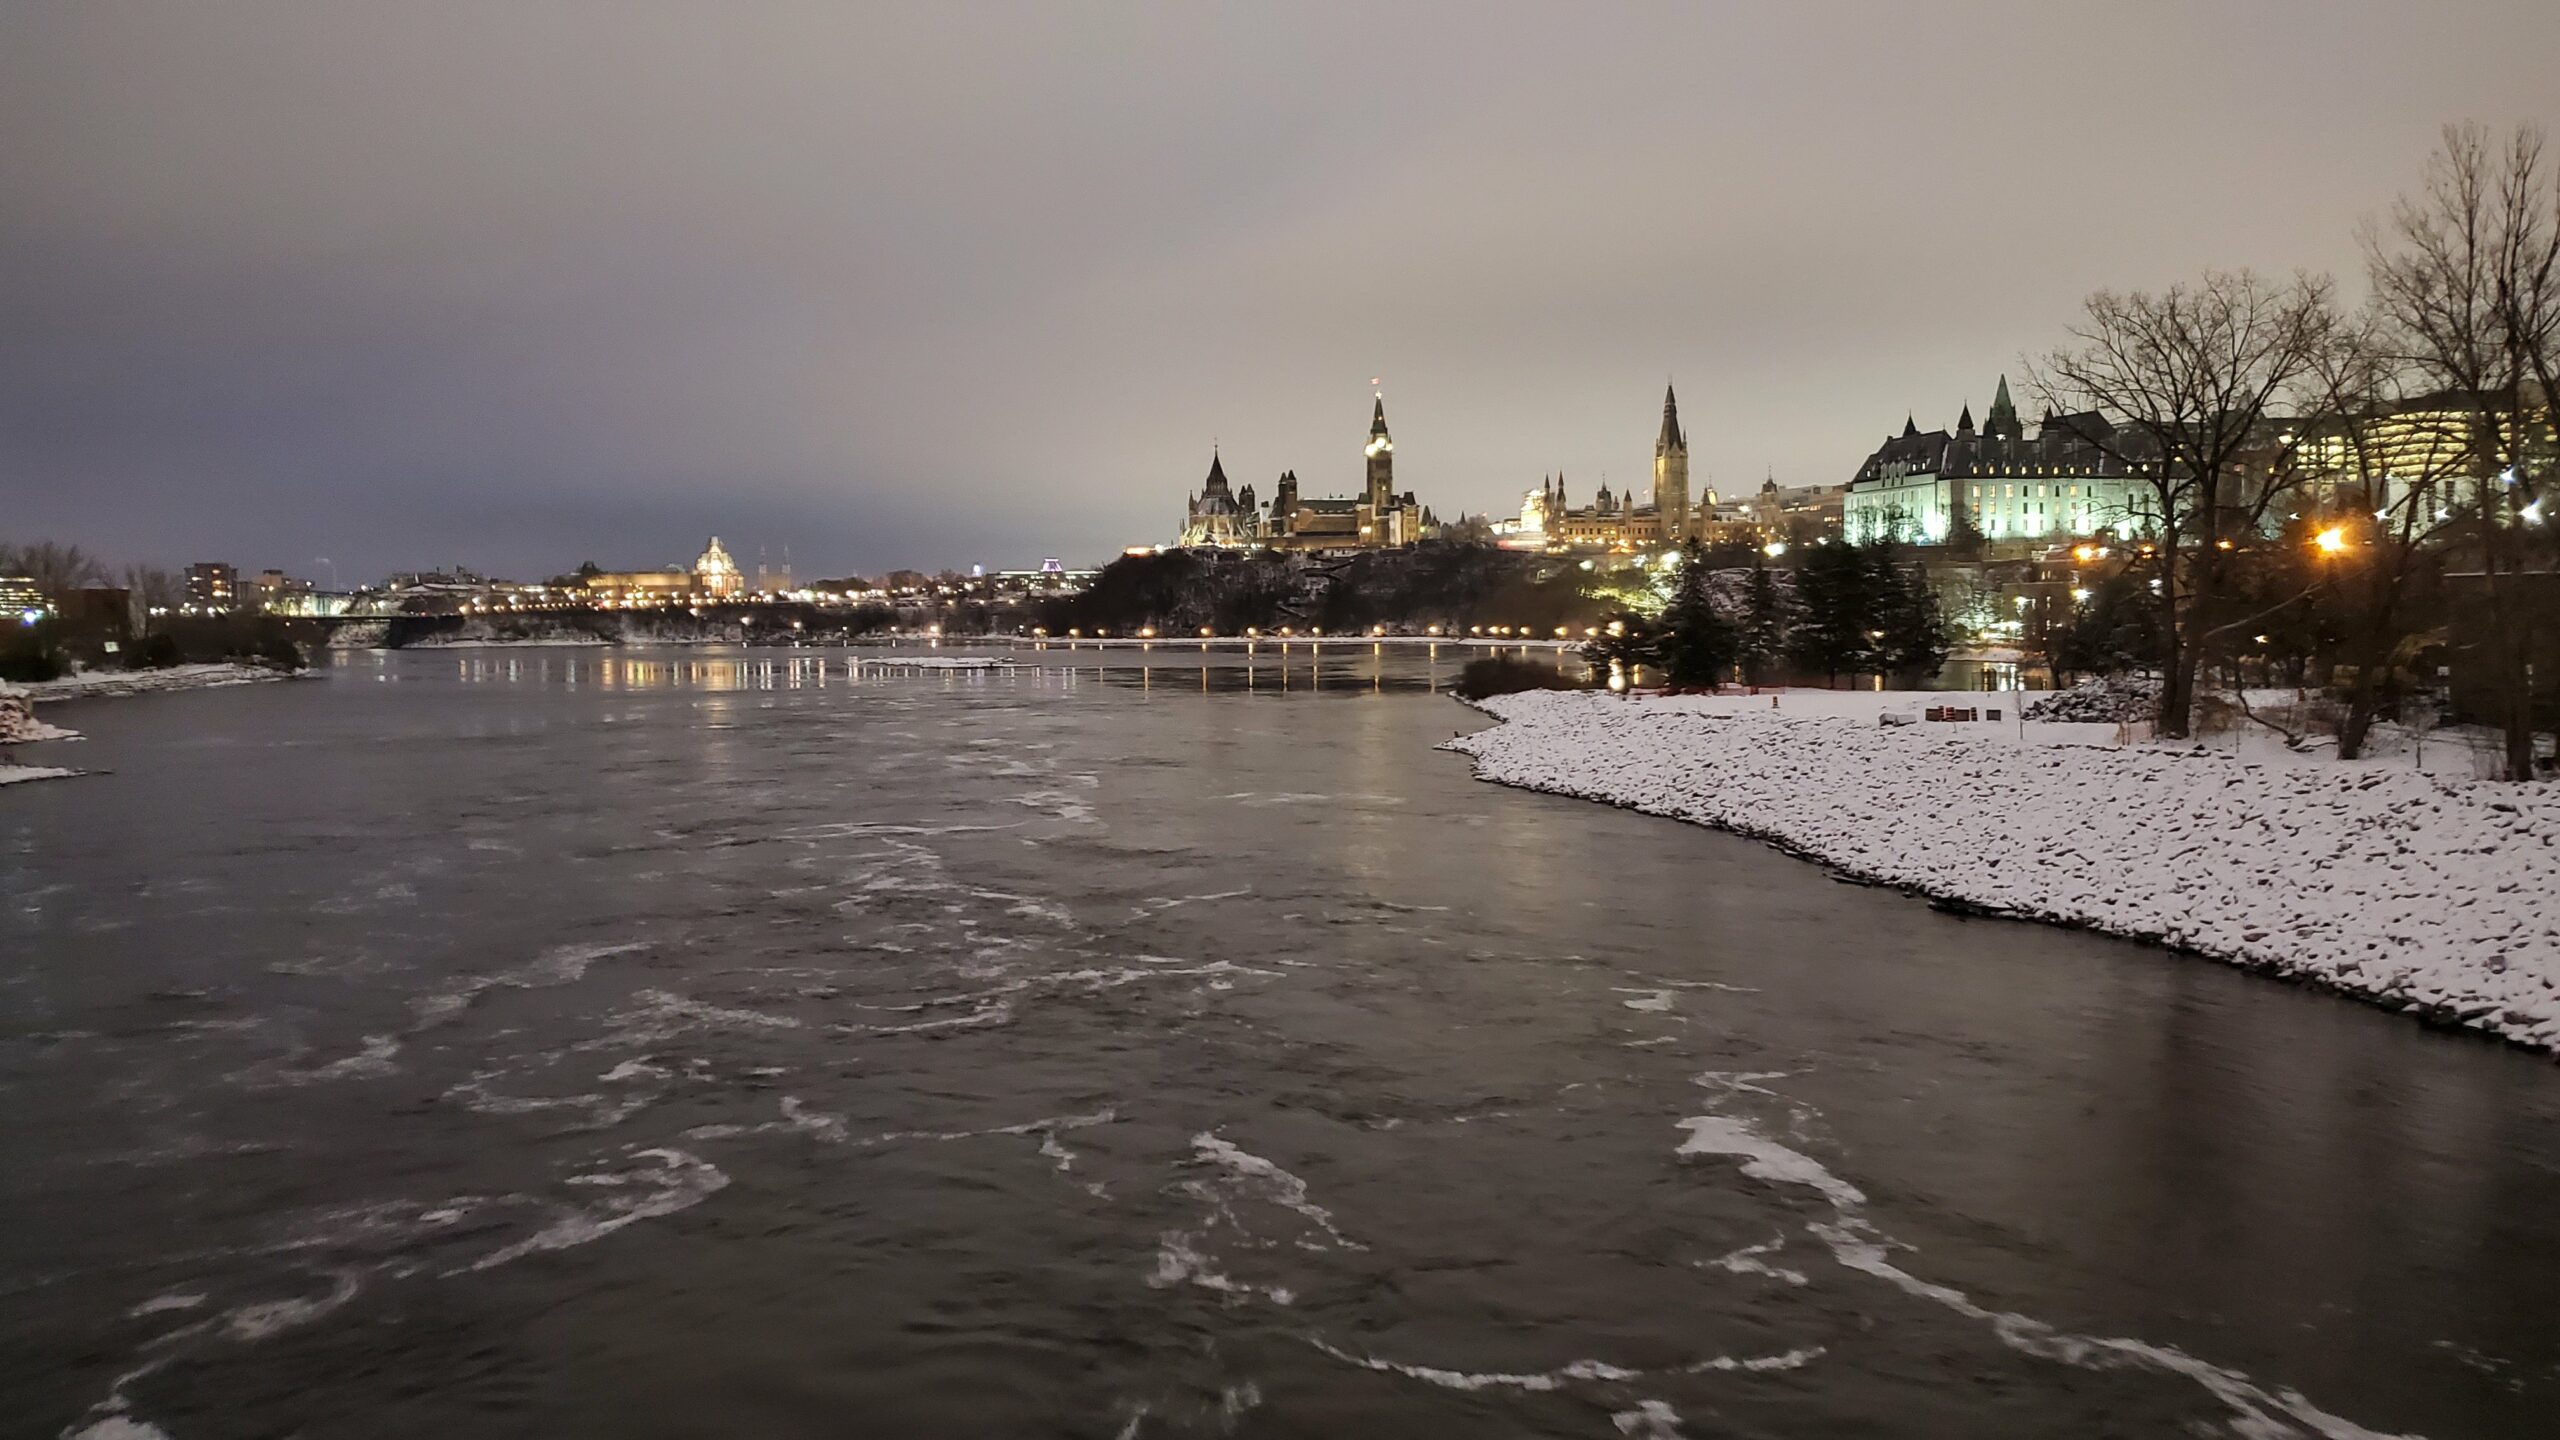 Night view of Ottawa's Parliament Hill in winter